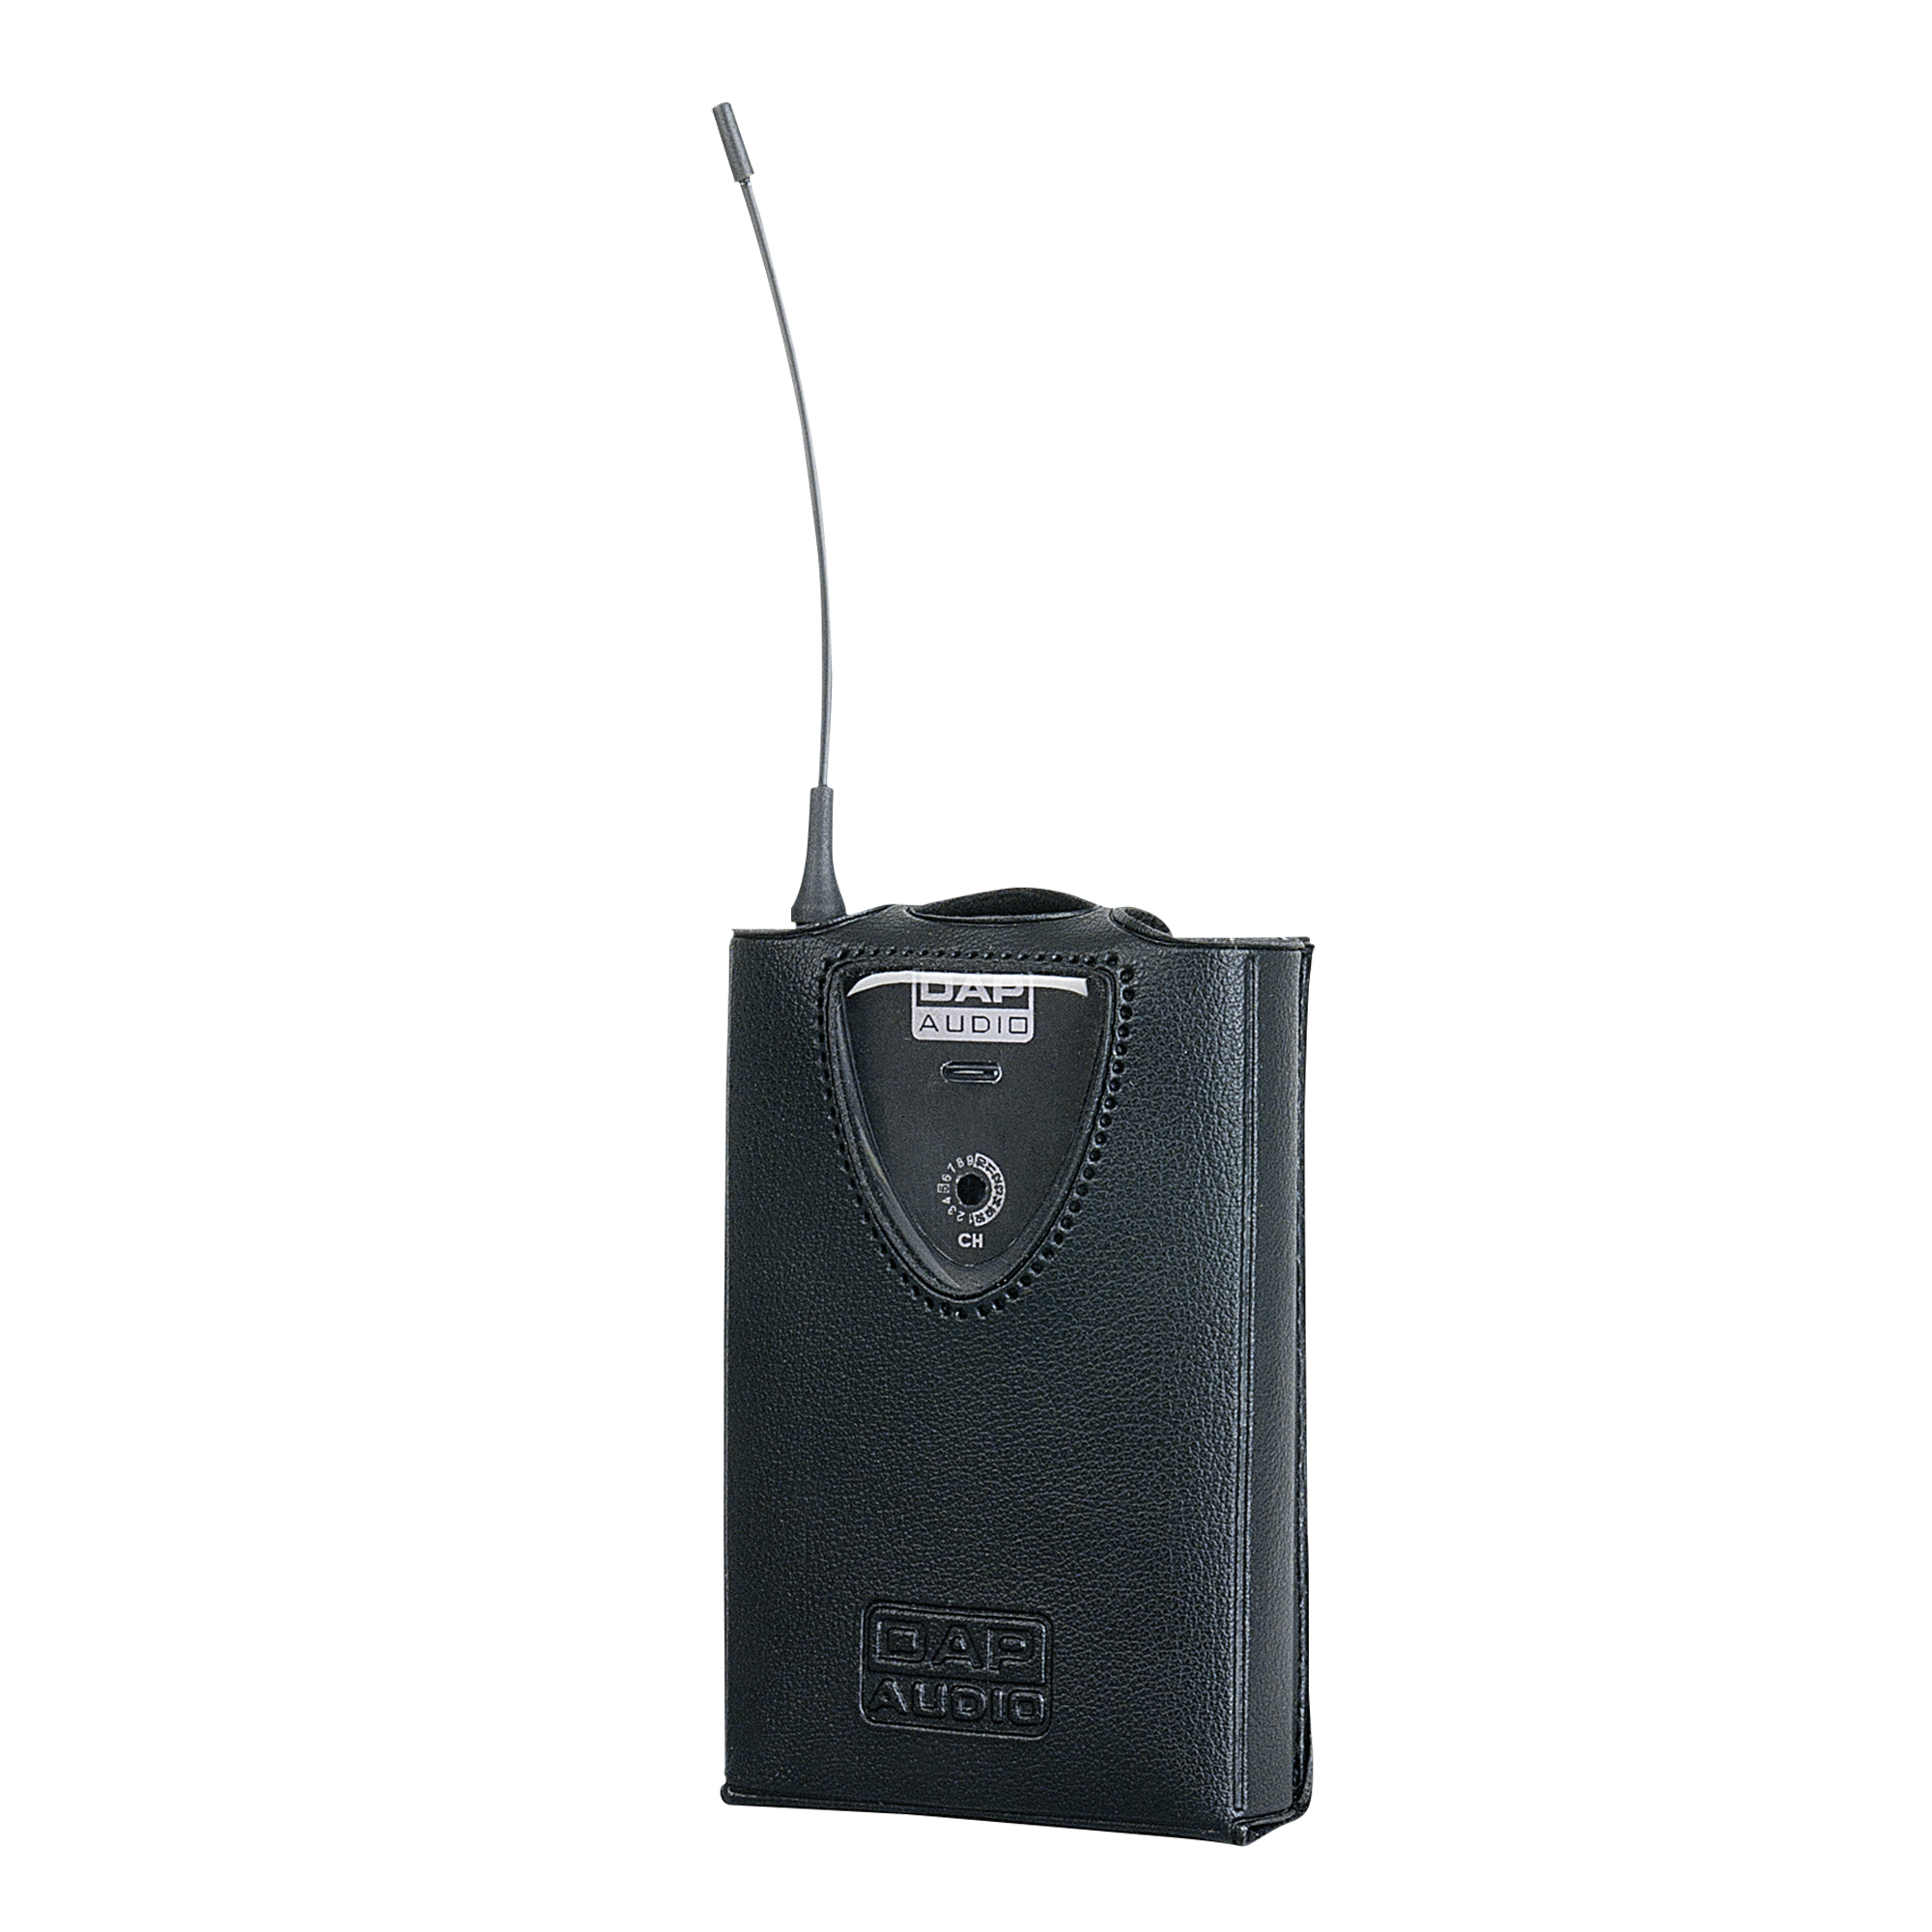 DAP EB-16B Kabelloser UHF-PLL-Beltpack-Sender - 16 Freq. - 614-638 MHz